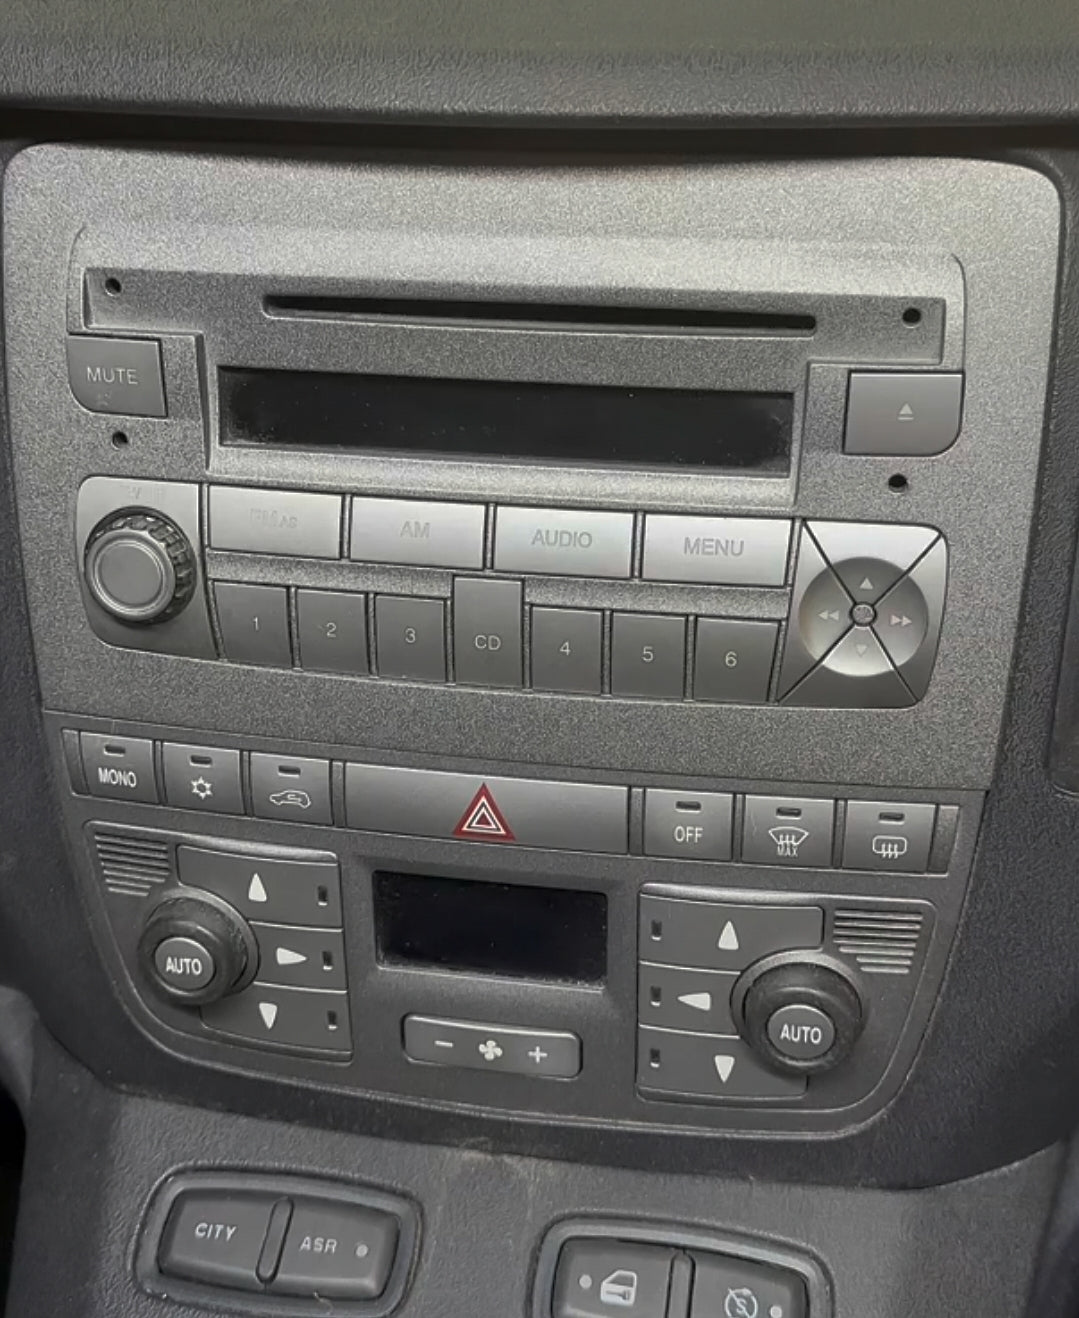 Autoradio per Fiat idea/Lancia Musa [2003-2008] - 2Din 7"Pollici Android, GPS, Bluetooth, Radio, Navigatore, Wifi, PlayStore